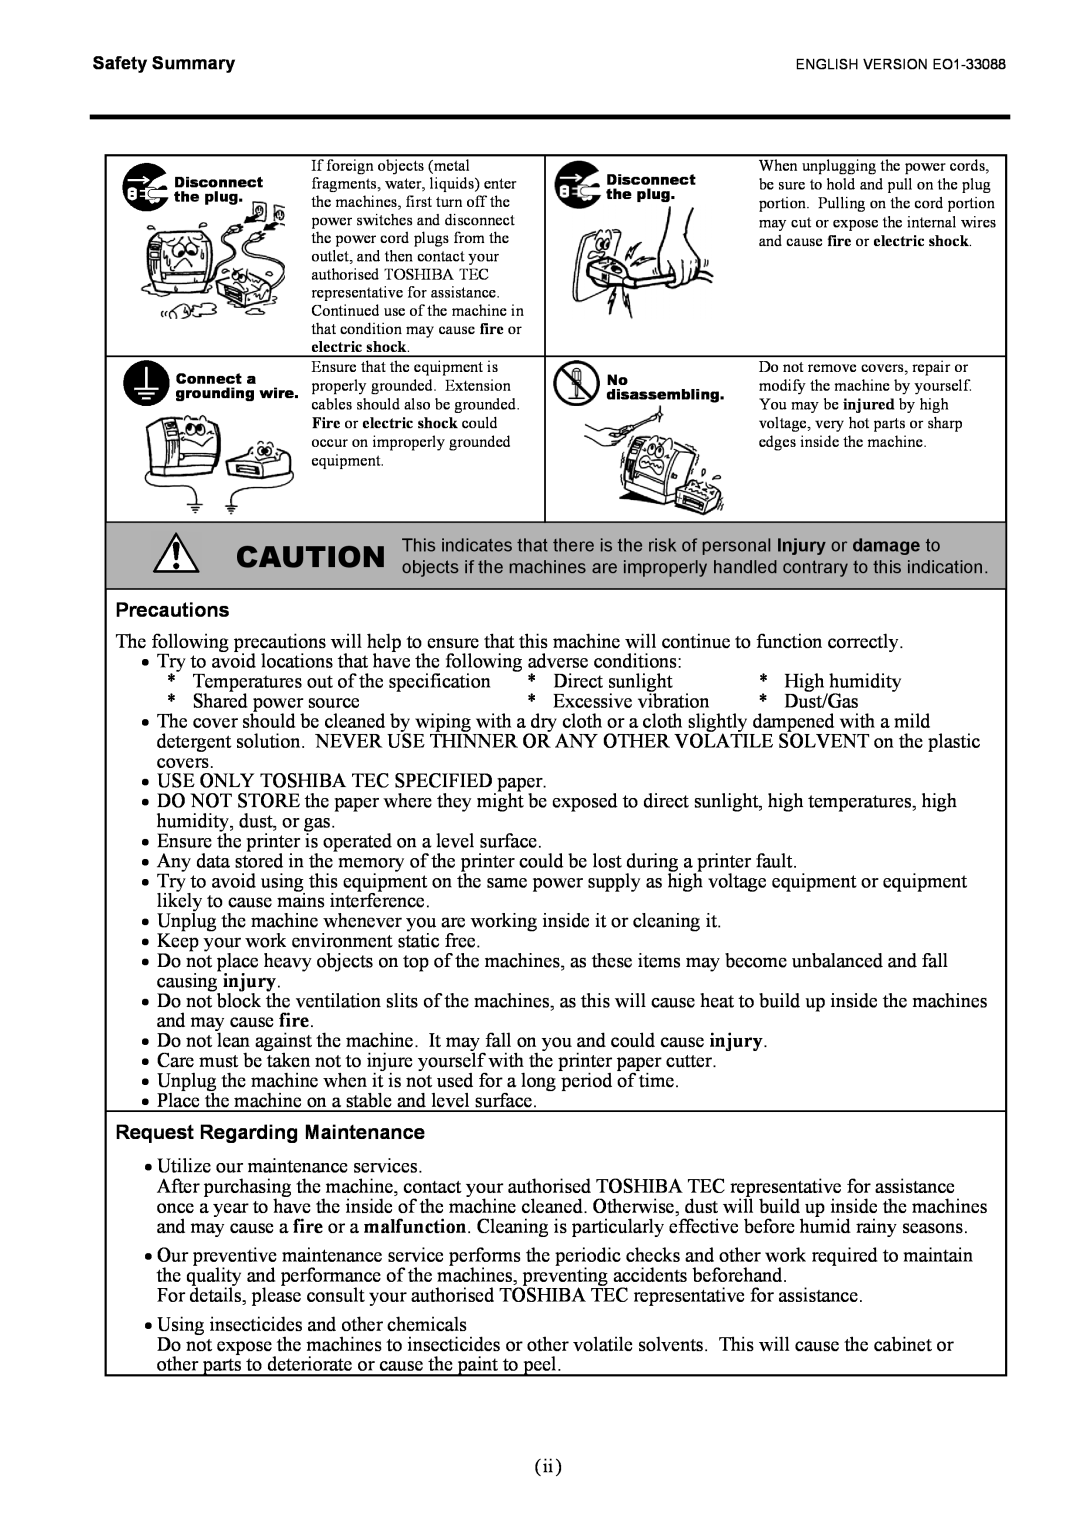 Toshiba EO1-33088, B-EV4D SERIES owner manual Precautions, Request Regarding Maintenance 